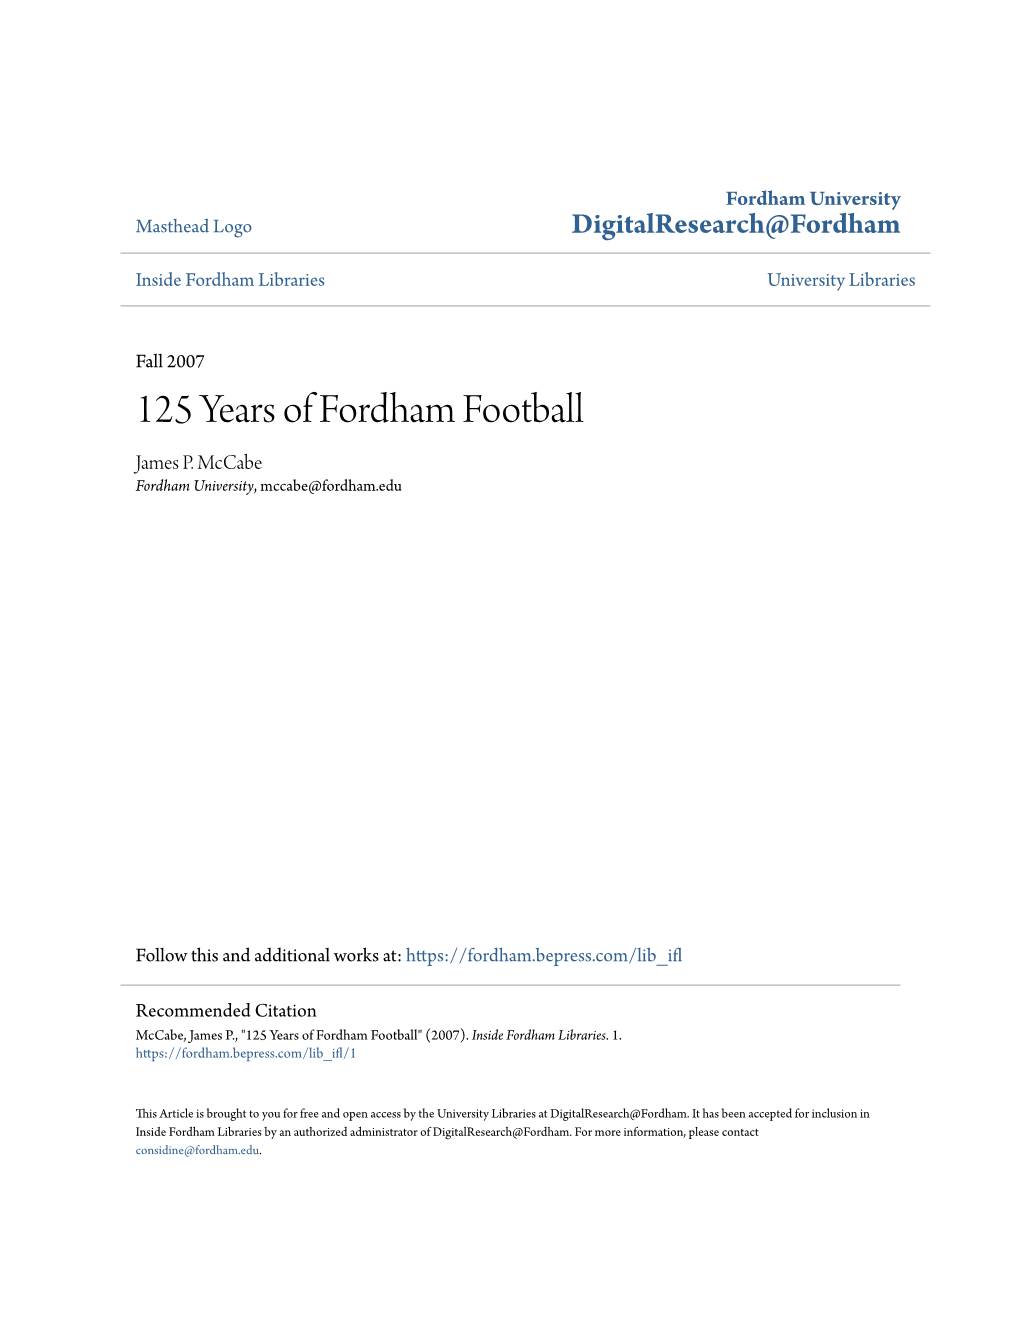 125 Years of Fordham Football James P